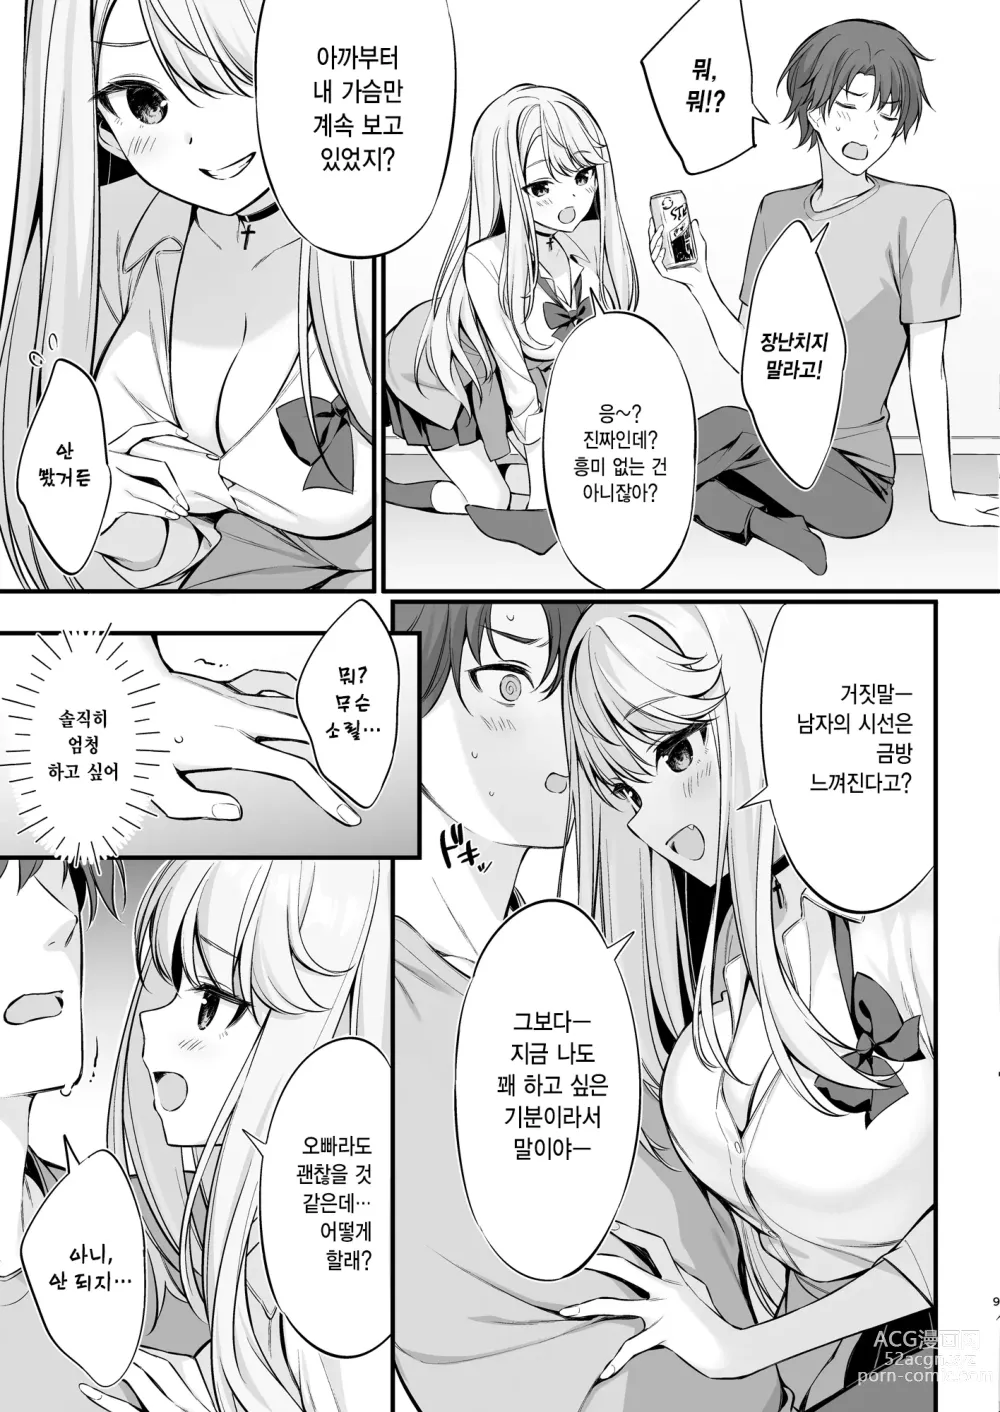 Page 8 of doujinshi SNS를 통해 만난 사람은 갸루가 된 여동생이었다